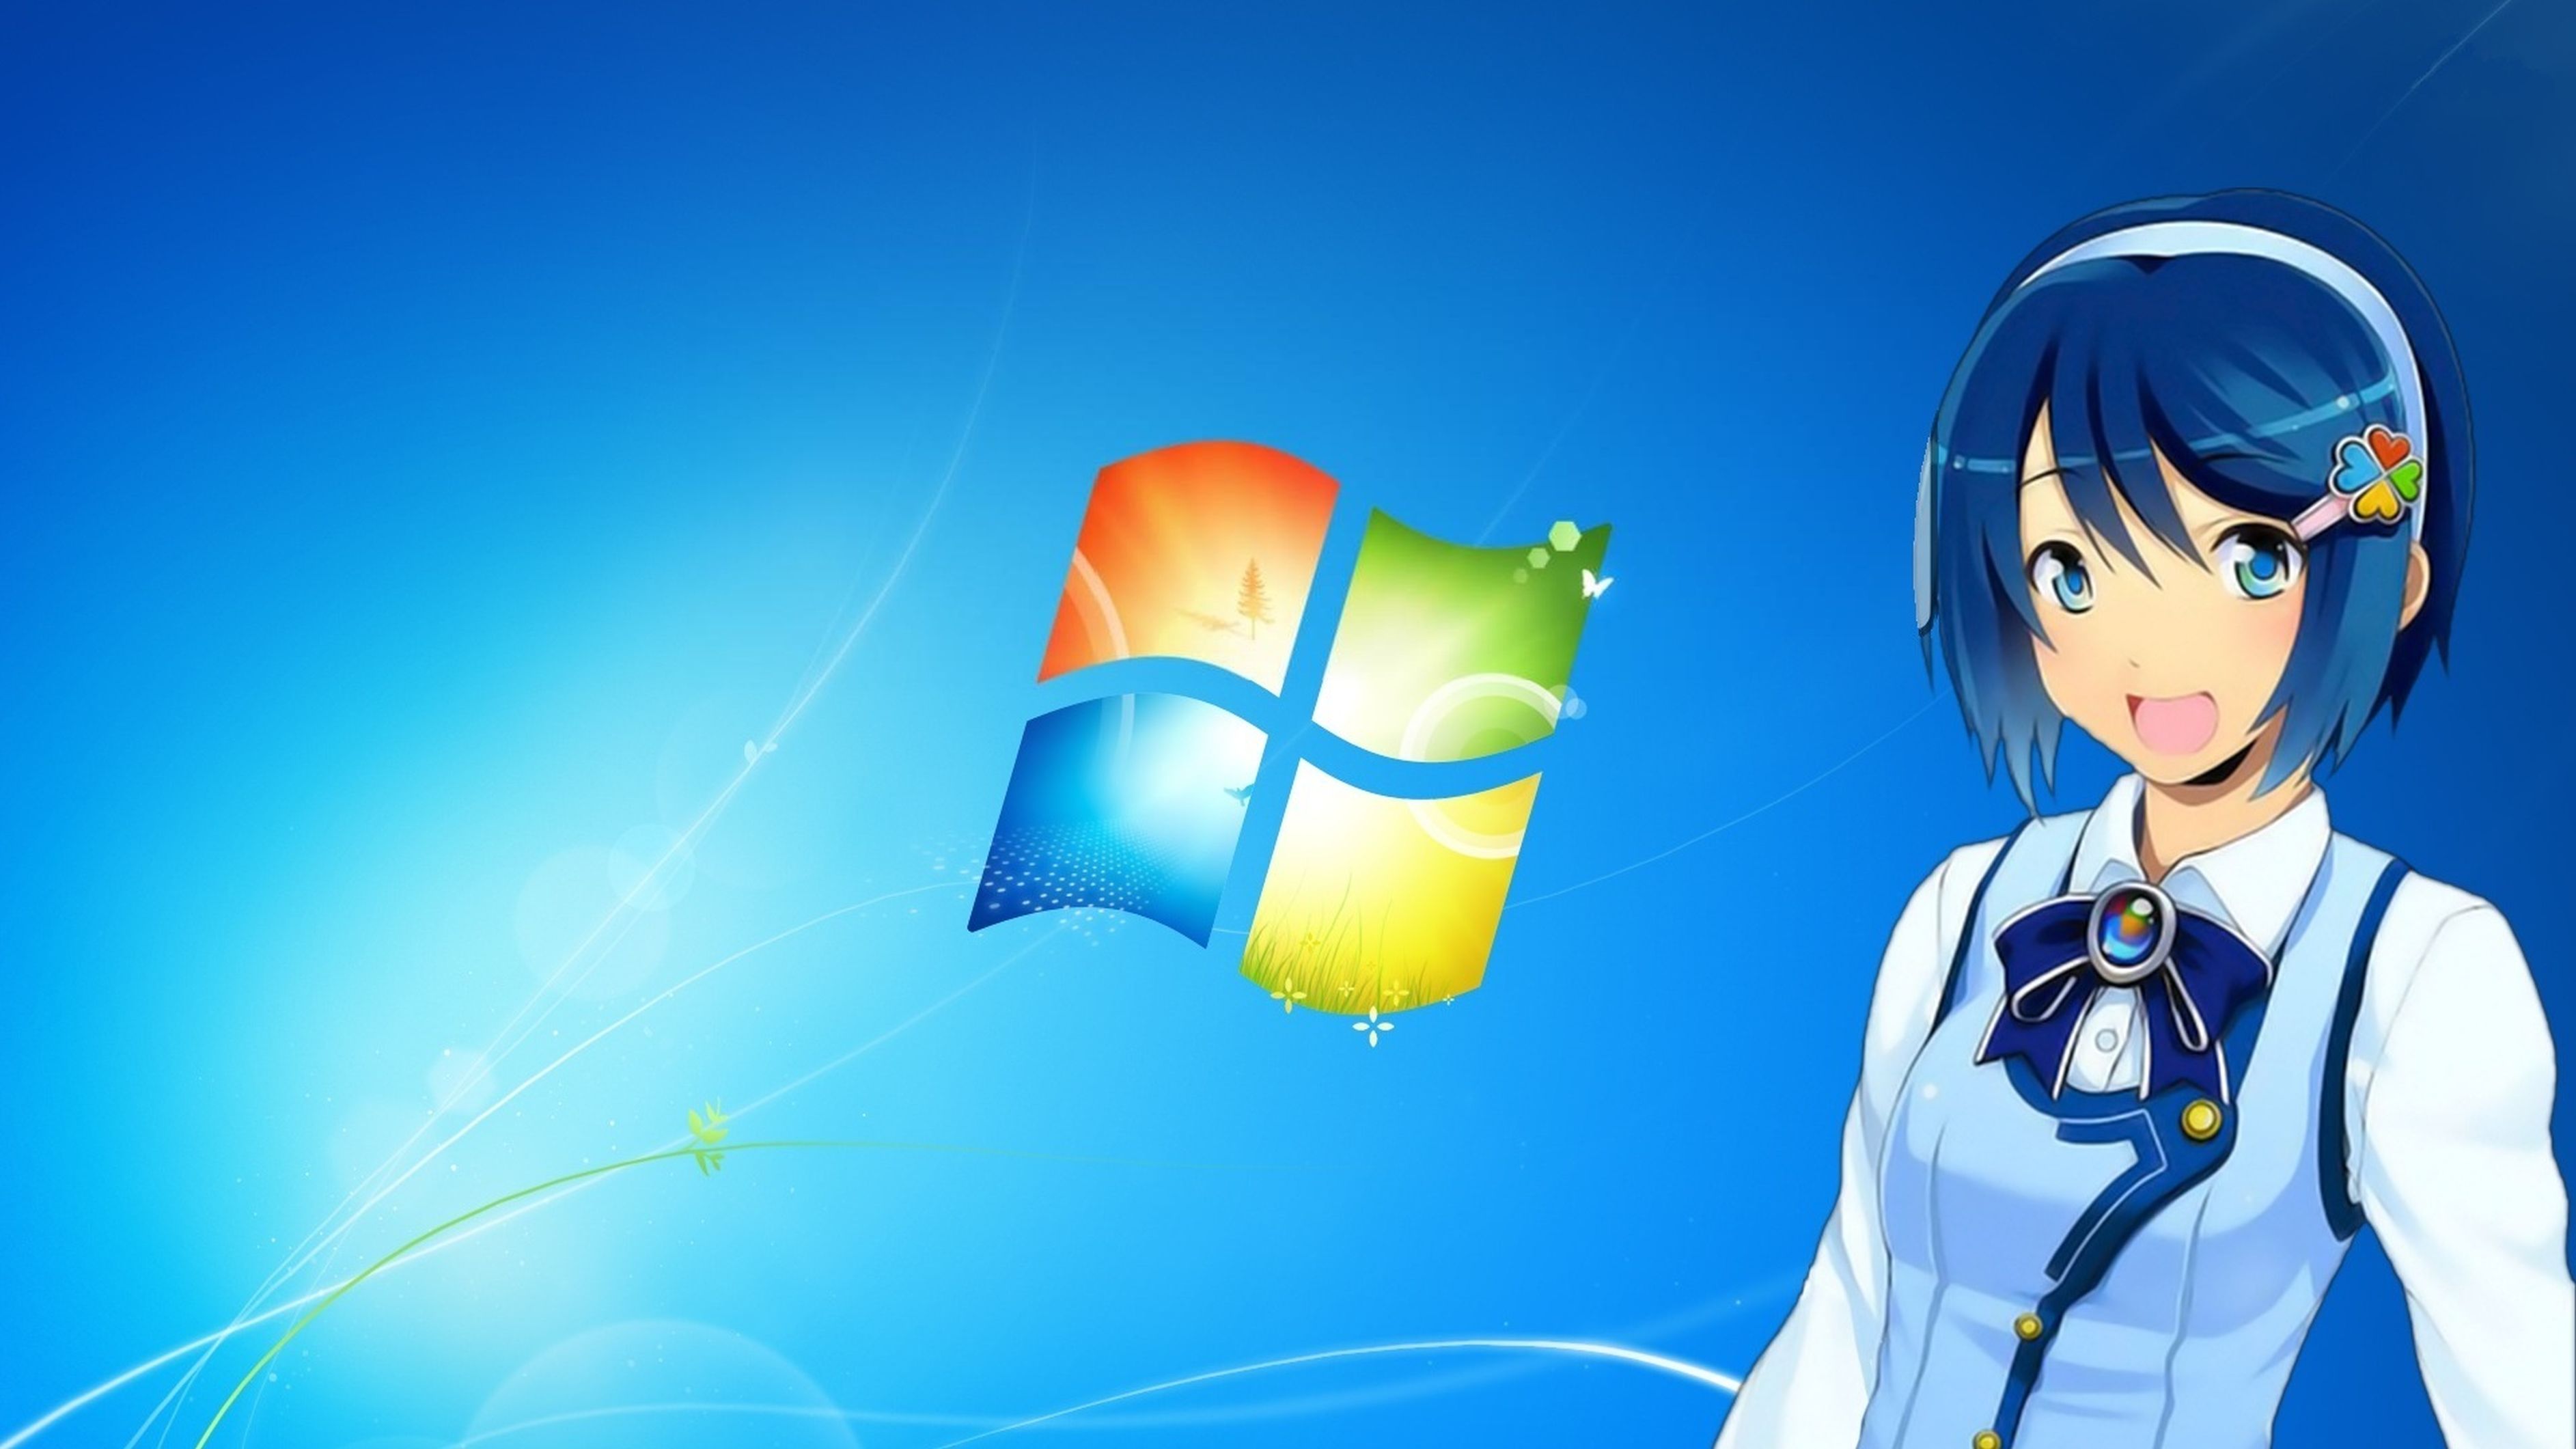 Windows (Anime themed) Wallpaper by CryADsisAM on DeviantArt